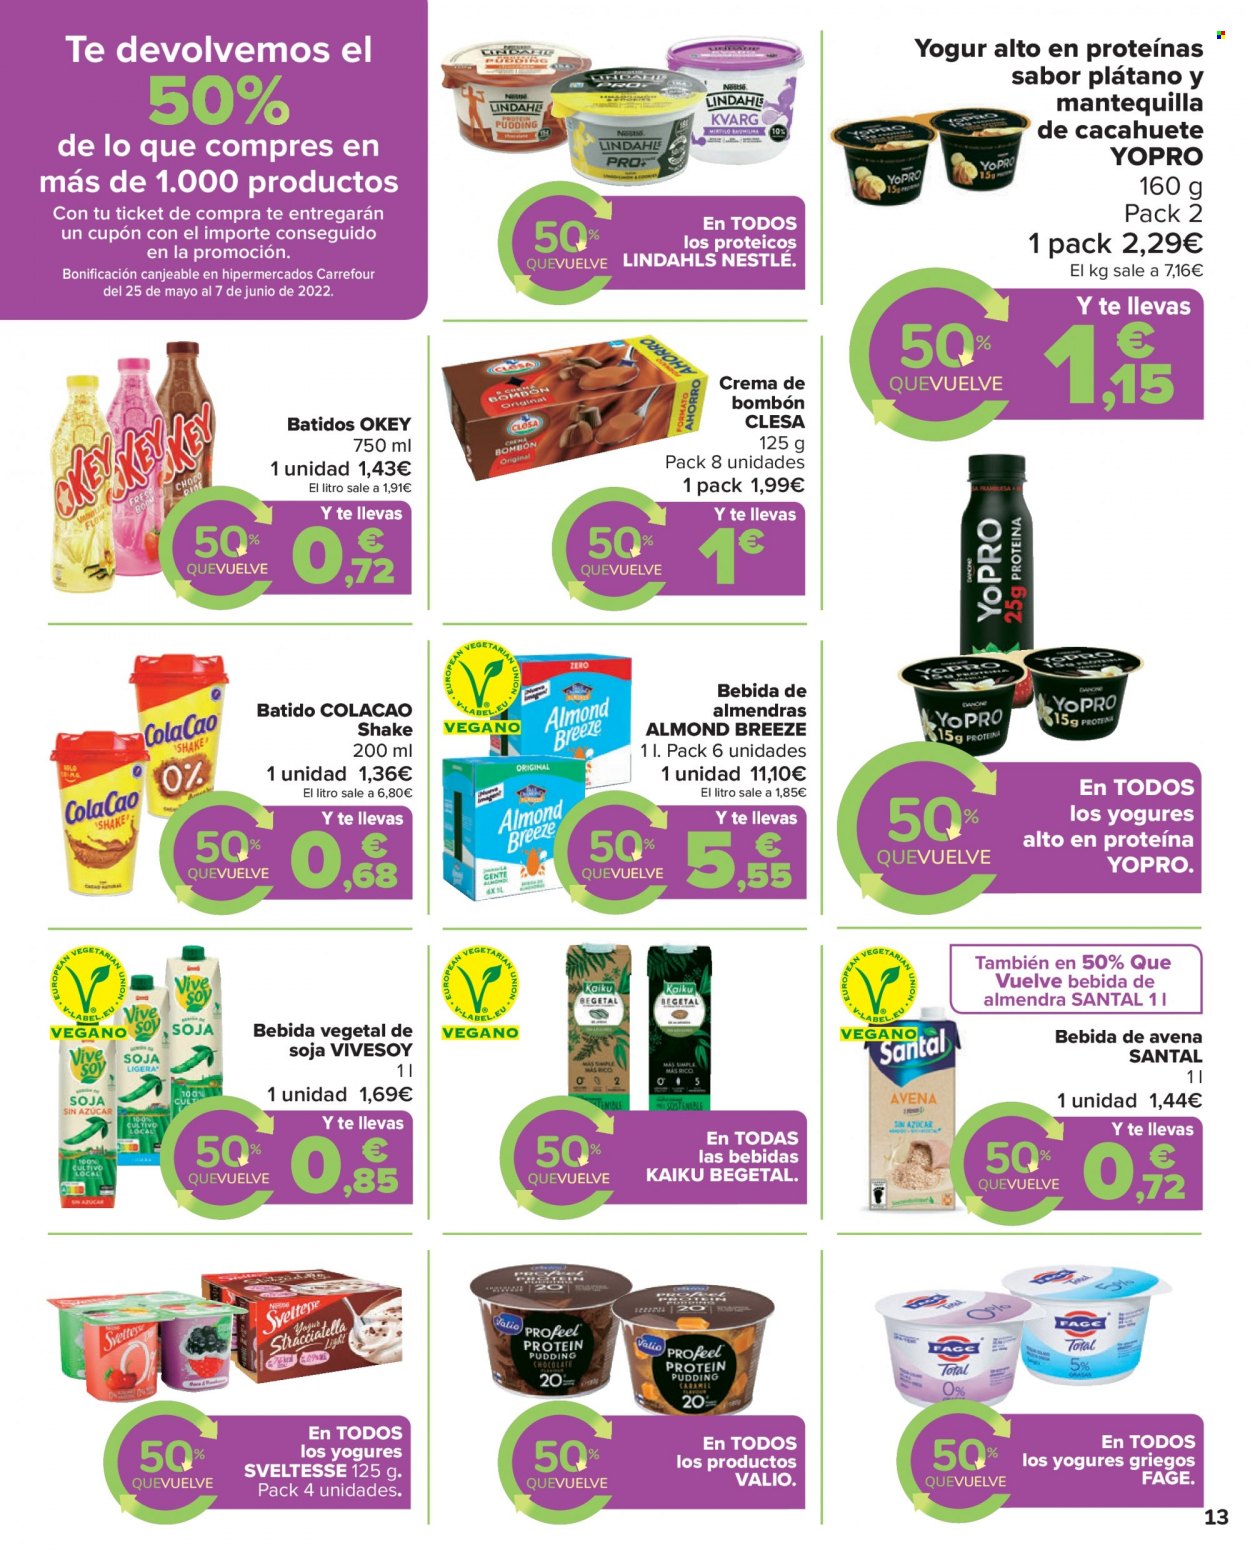 thumbnail - Folleto actual Carrefour - 11/05/22 - 24/05/22 - Ventas - pudding, leche de avena, bombones, Nestlé, Cola Cao. Página 13.